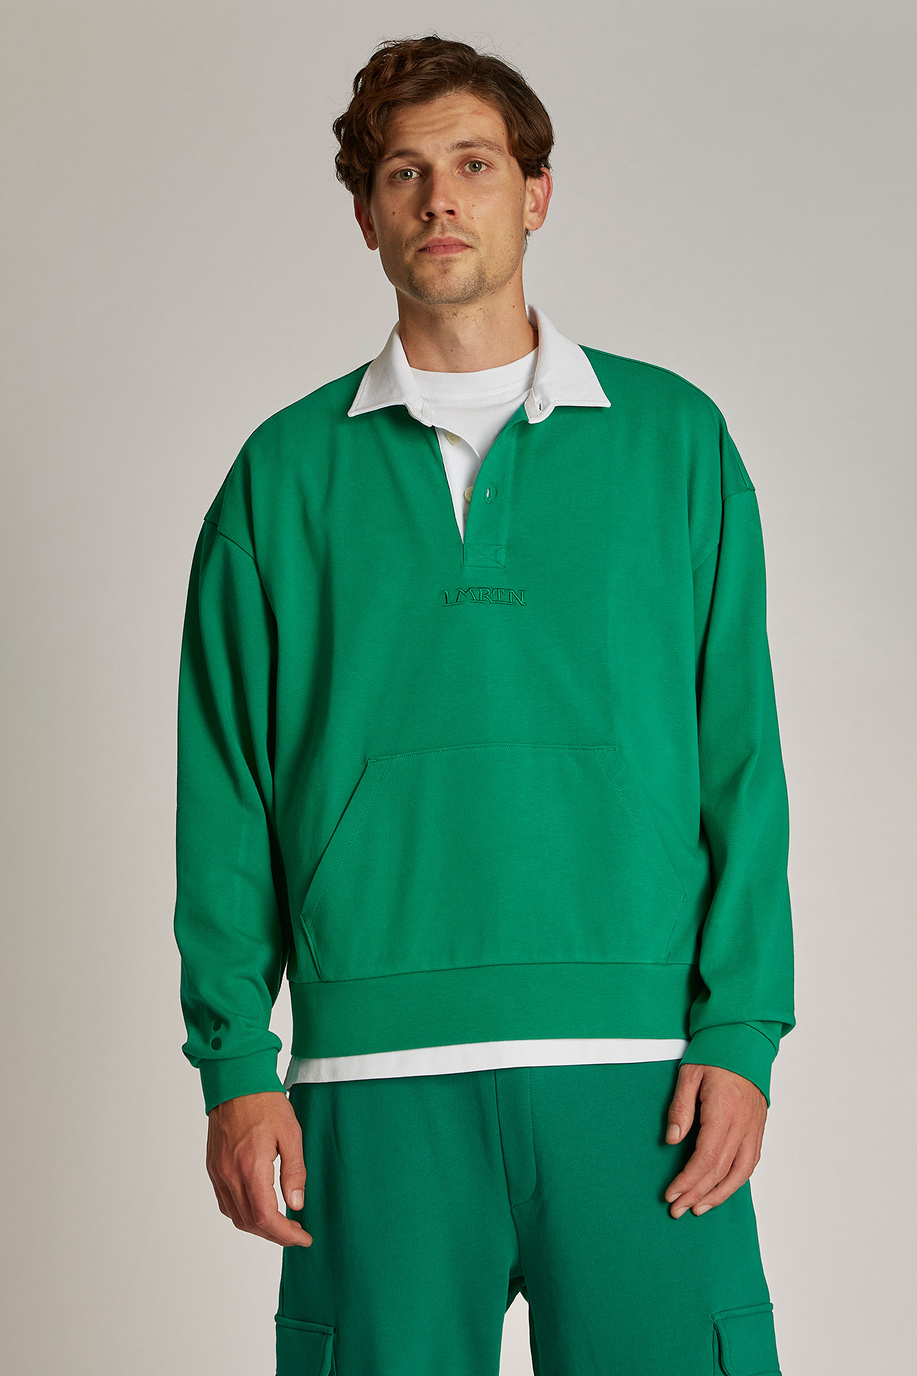 Men's oversized 100% cotton sweatshirt featuring a contrasting collar - Inspiration | La Martina - Official Online Shop